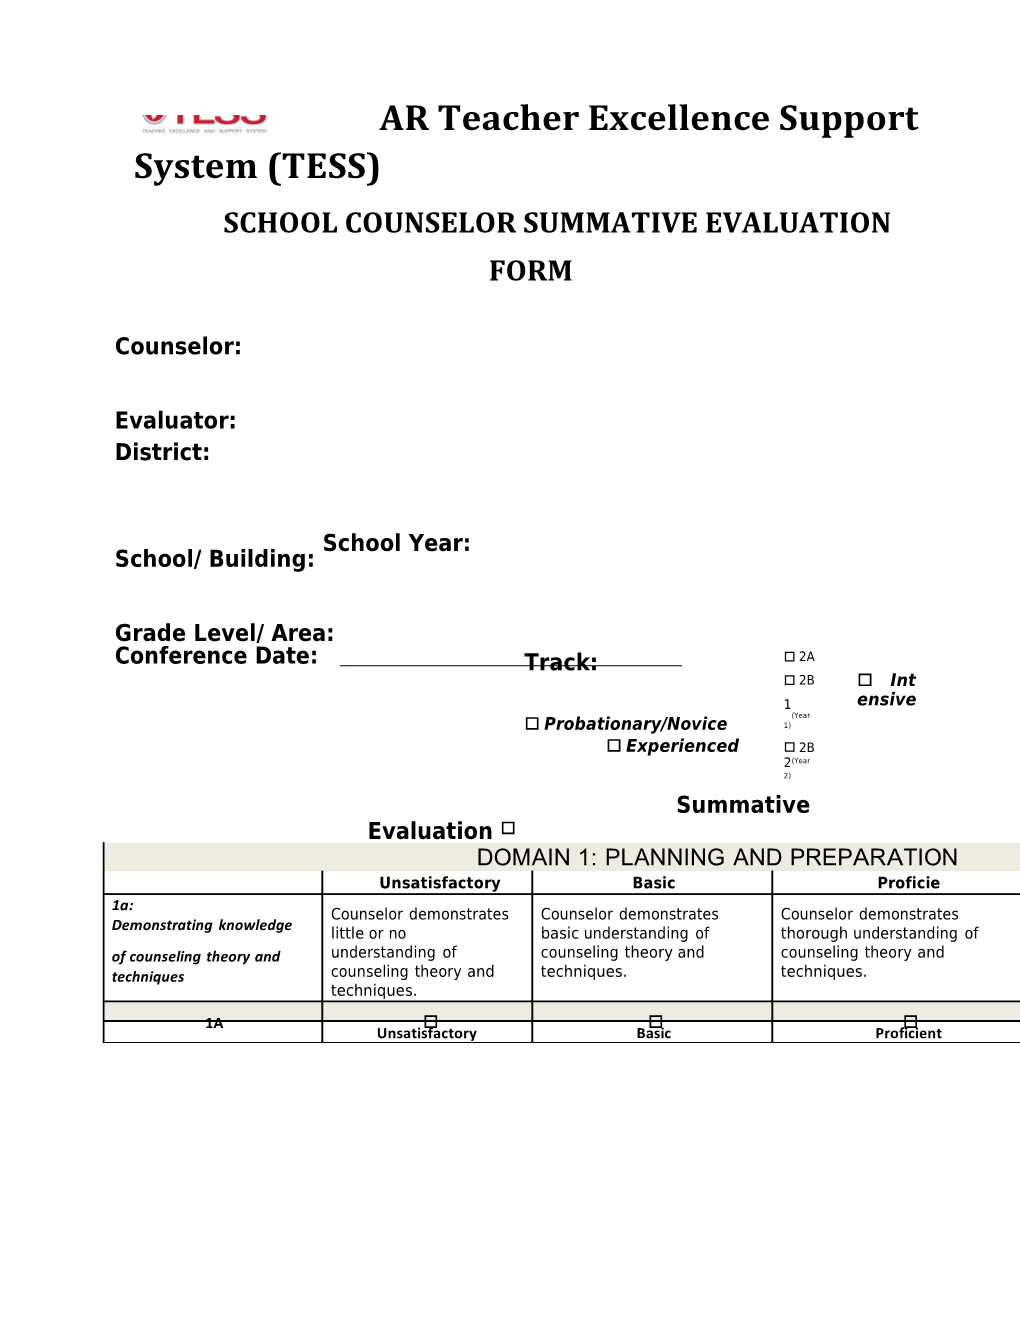 School Counselor Summative Evaluation Form